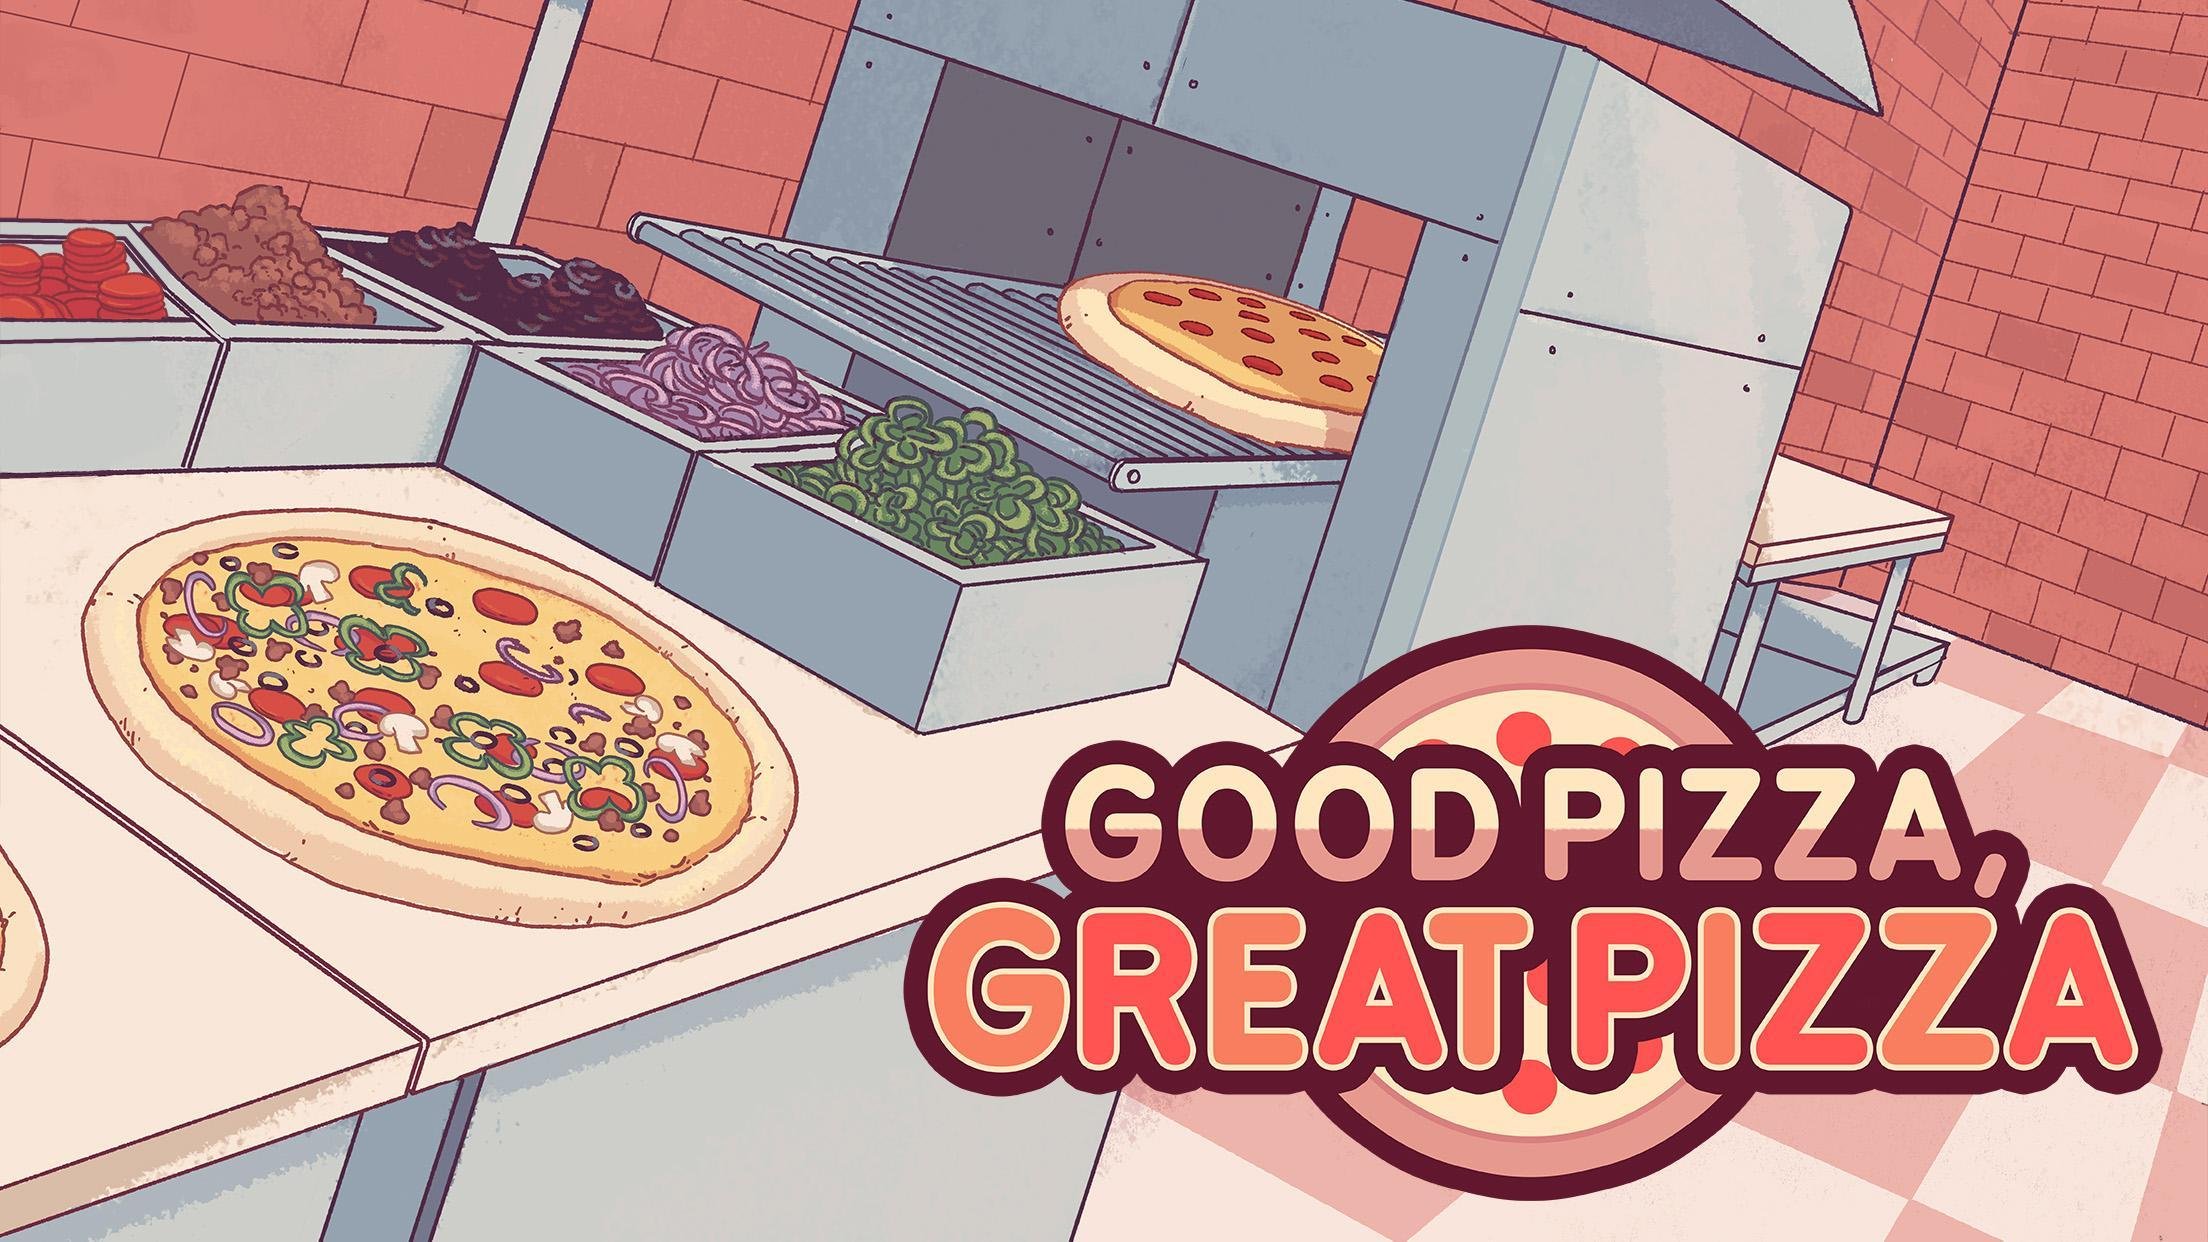 Игру пицца хотите. Игра пиццерия good pizza. Хорошая пицца отличная пицца. Игра хорошая пицца отличная пицца. Пиццерия хорошая пицца отличная пицца.